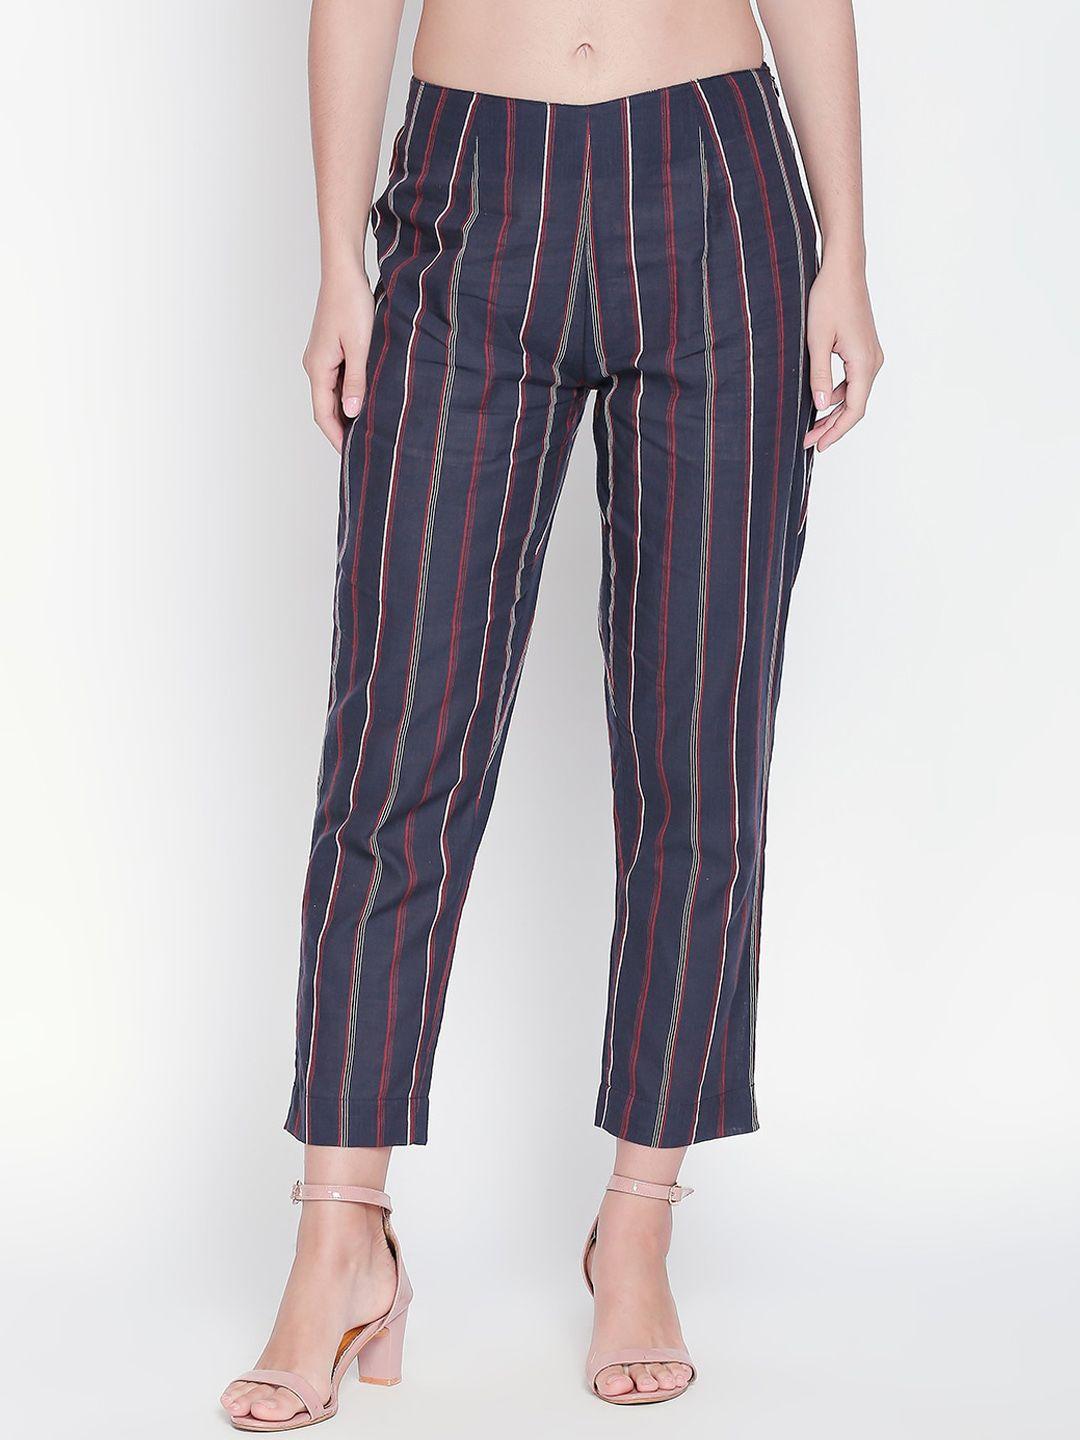 rangmanch-by-pantaloons-women-violet-slim-fit-striped-regular-trousers